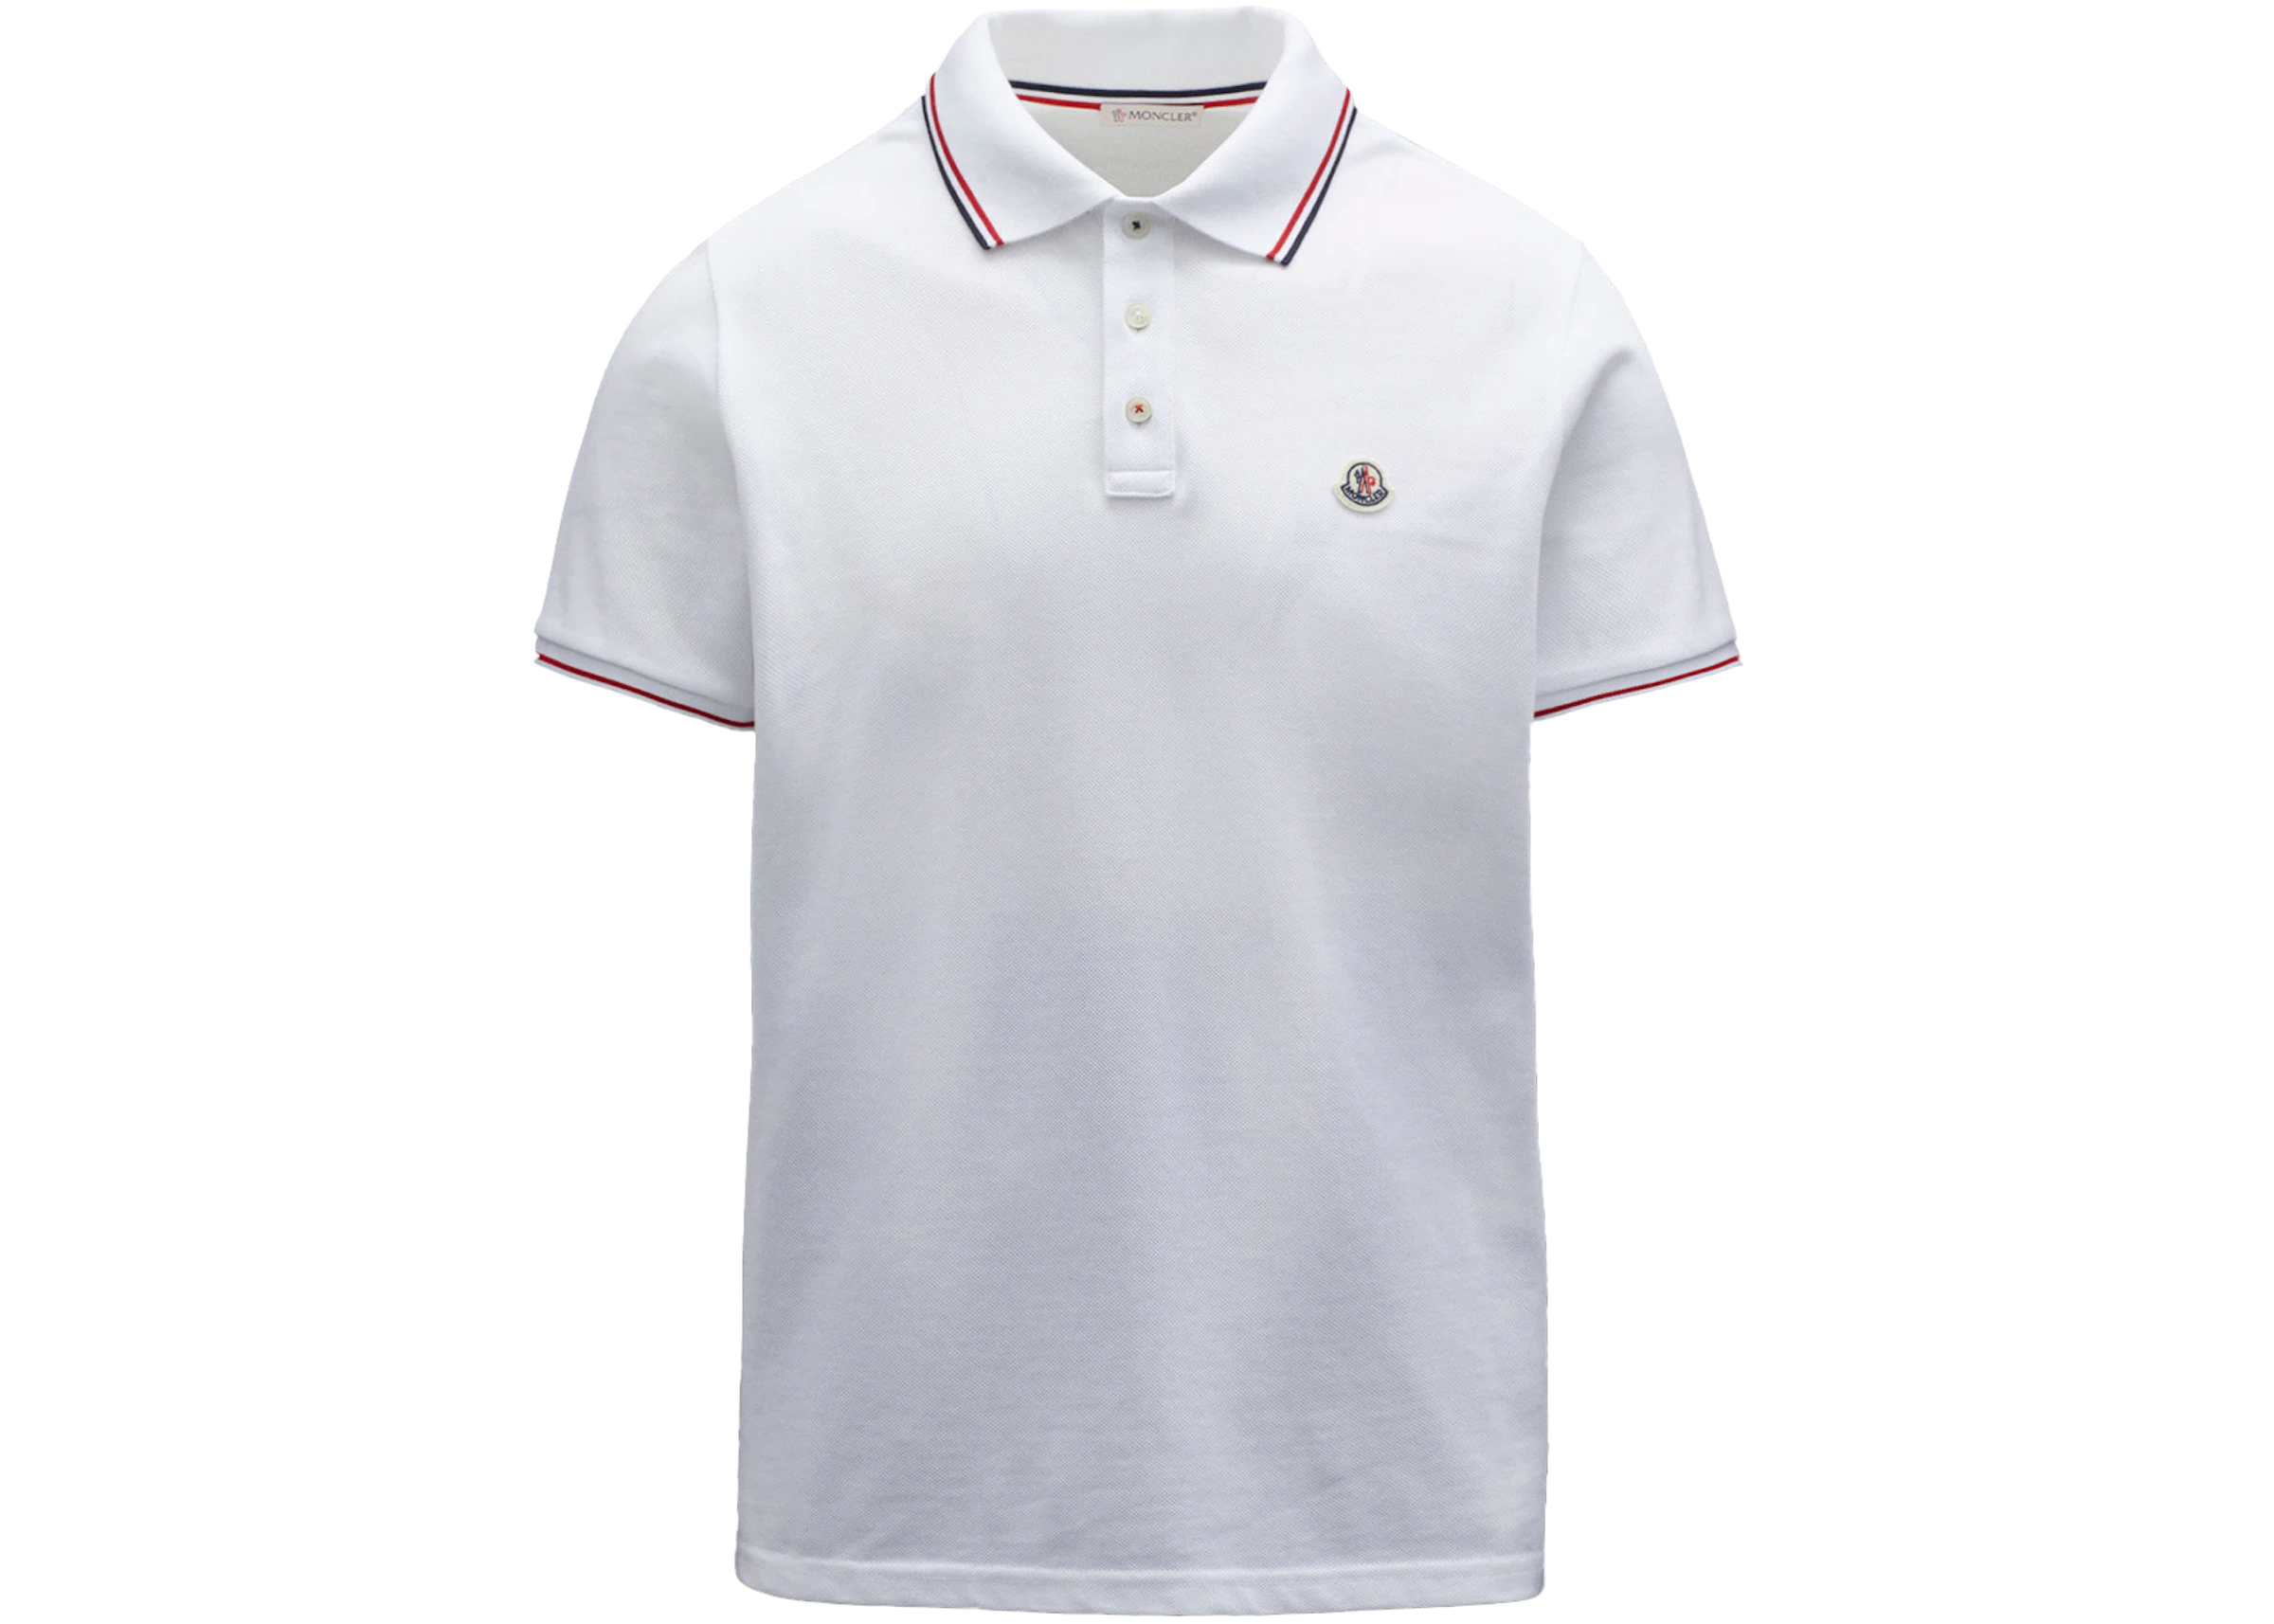 Sitcom deer Advanced Moncler Logo Polo Shirt White/Red/Black - US